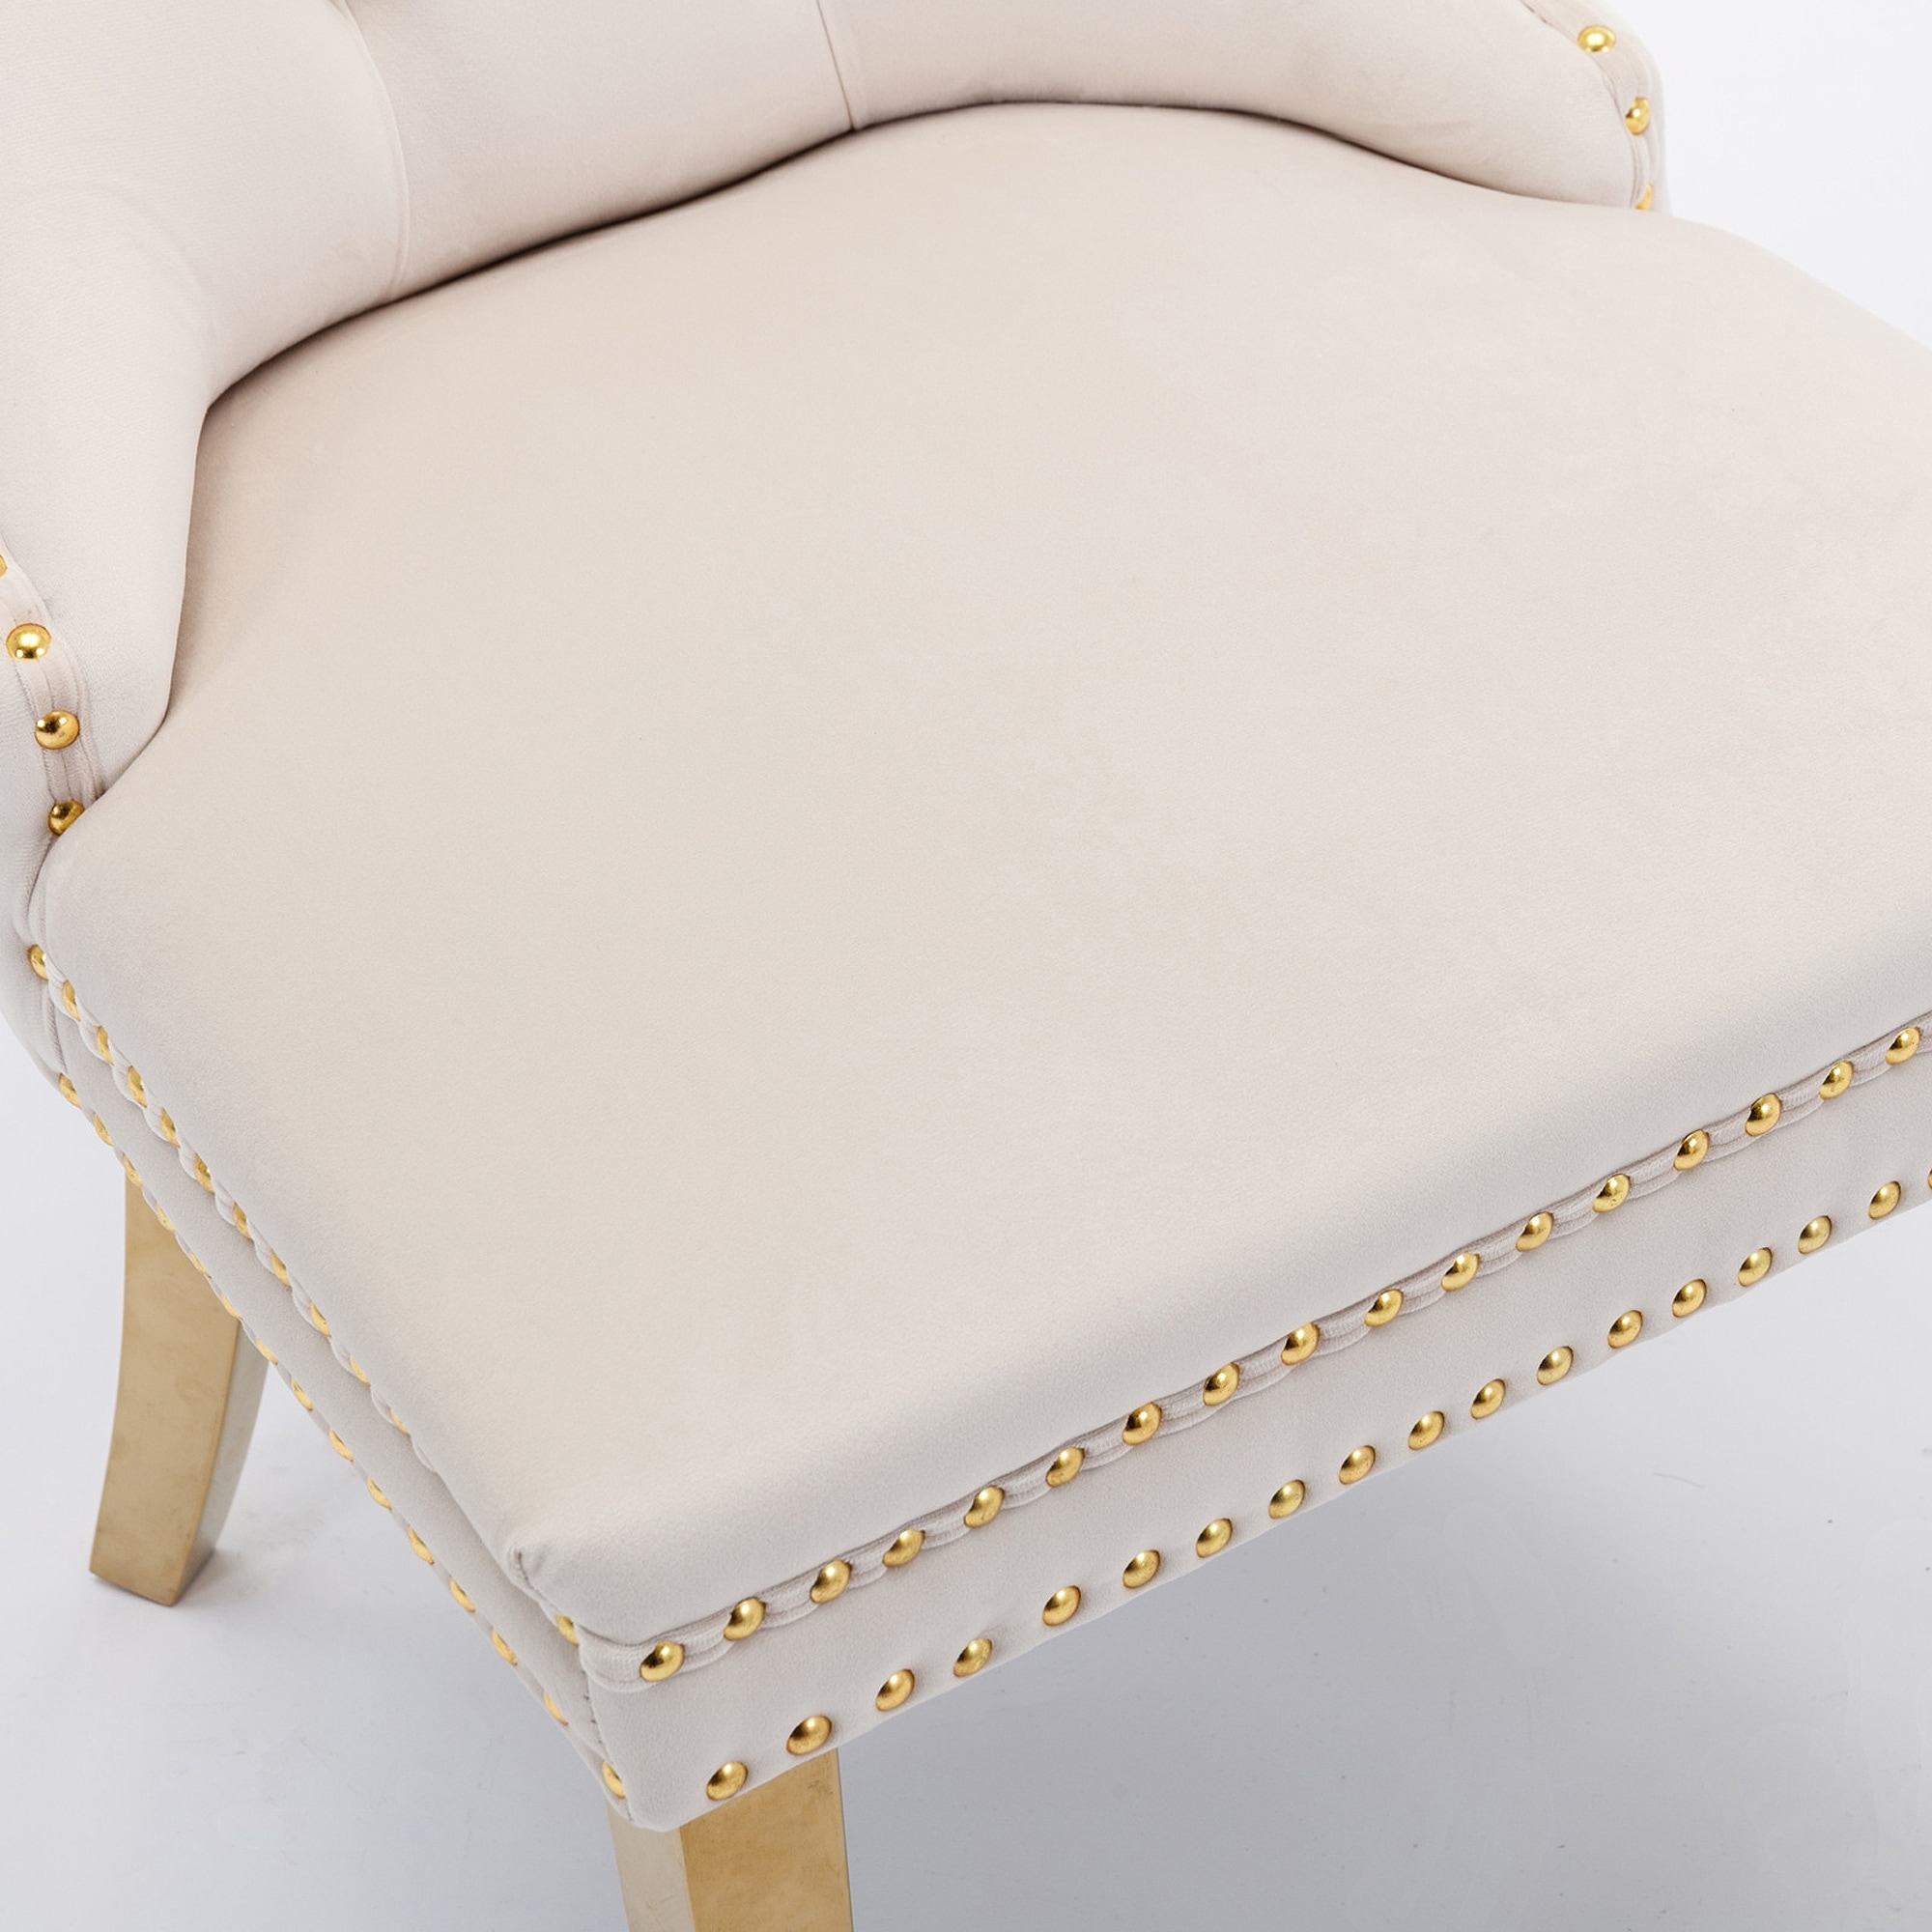 Velvet Upholstered Dining Chair with Golden Stainless Steel Plating Legs,Nailhead Trim,Set of 2